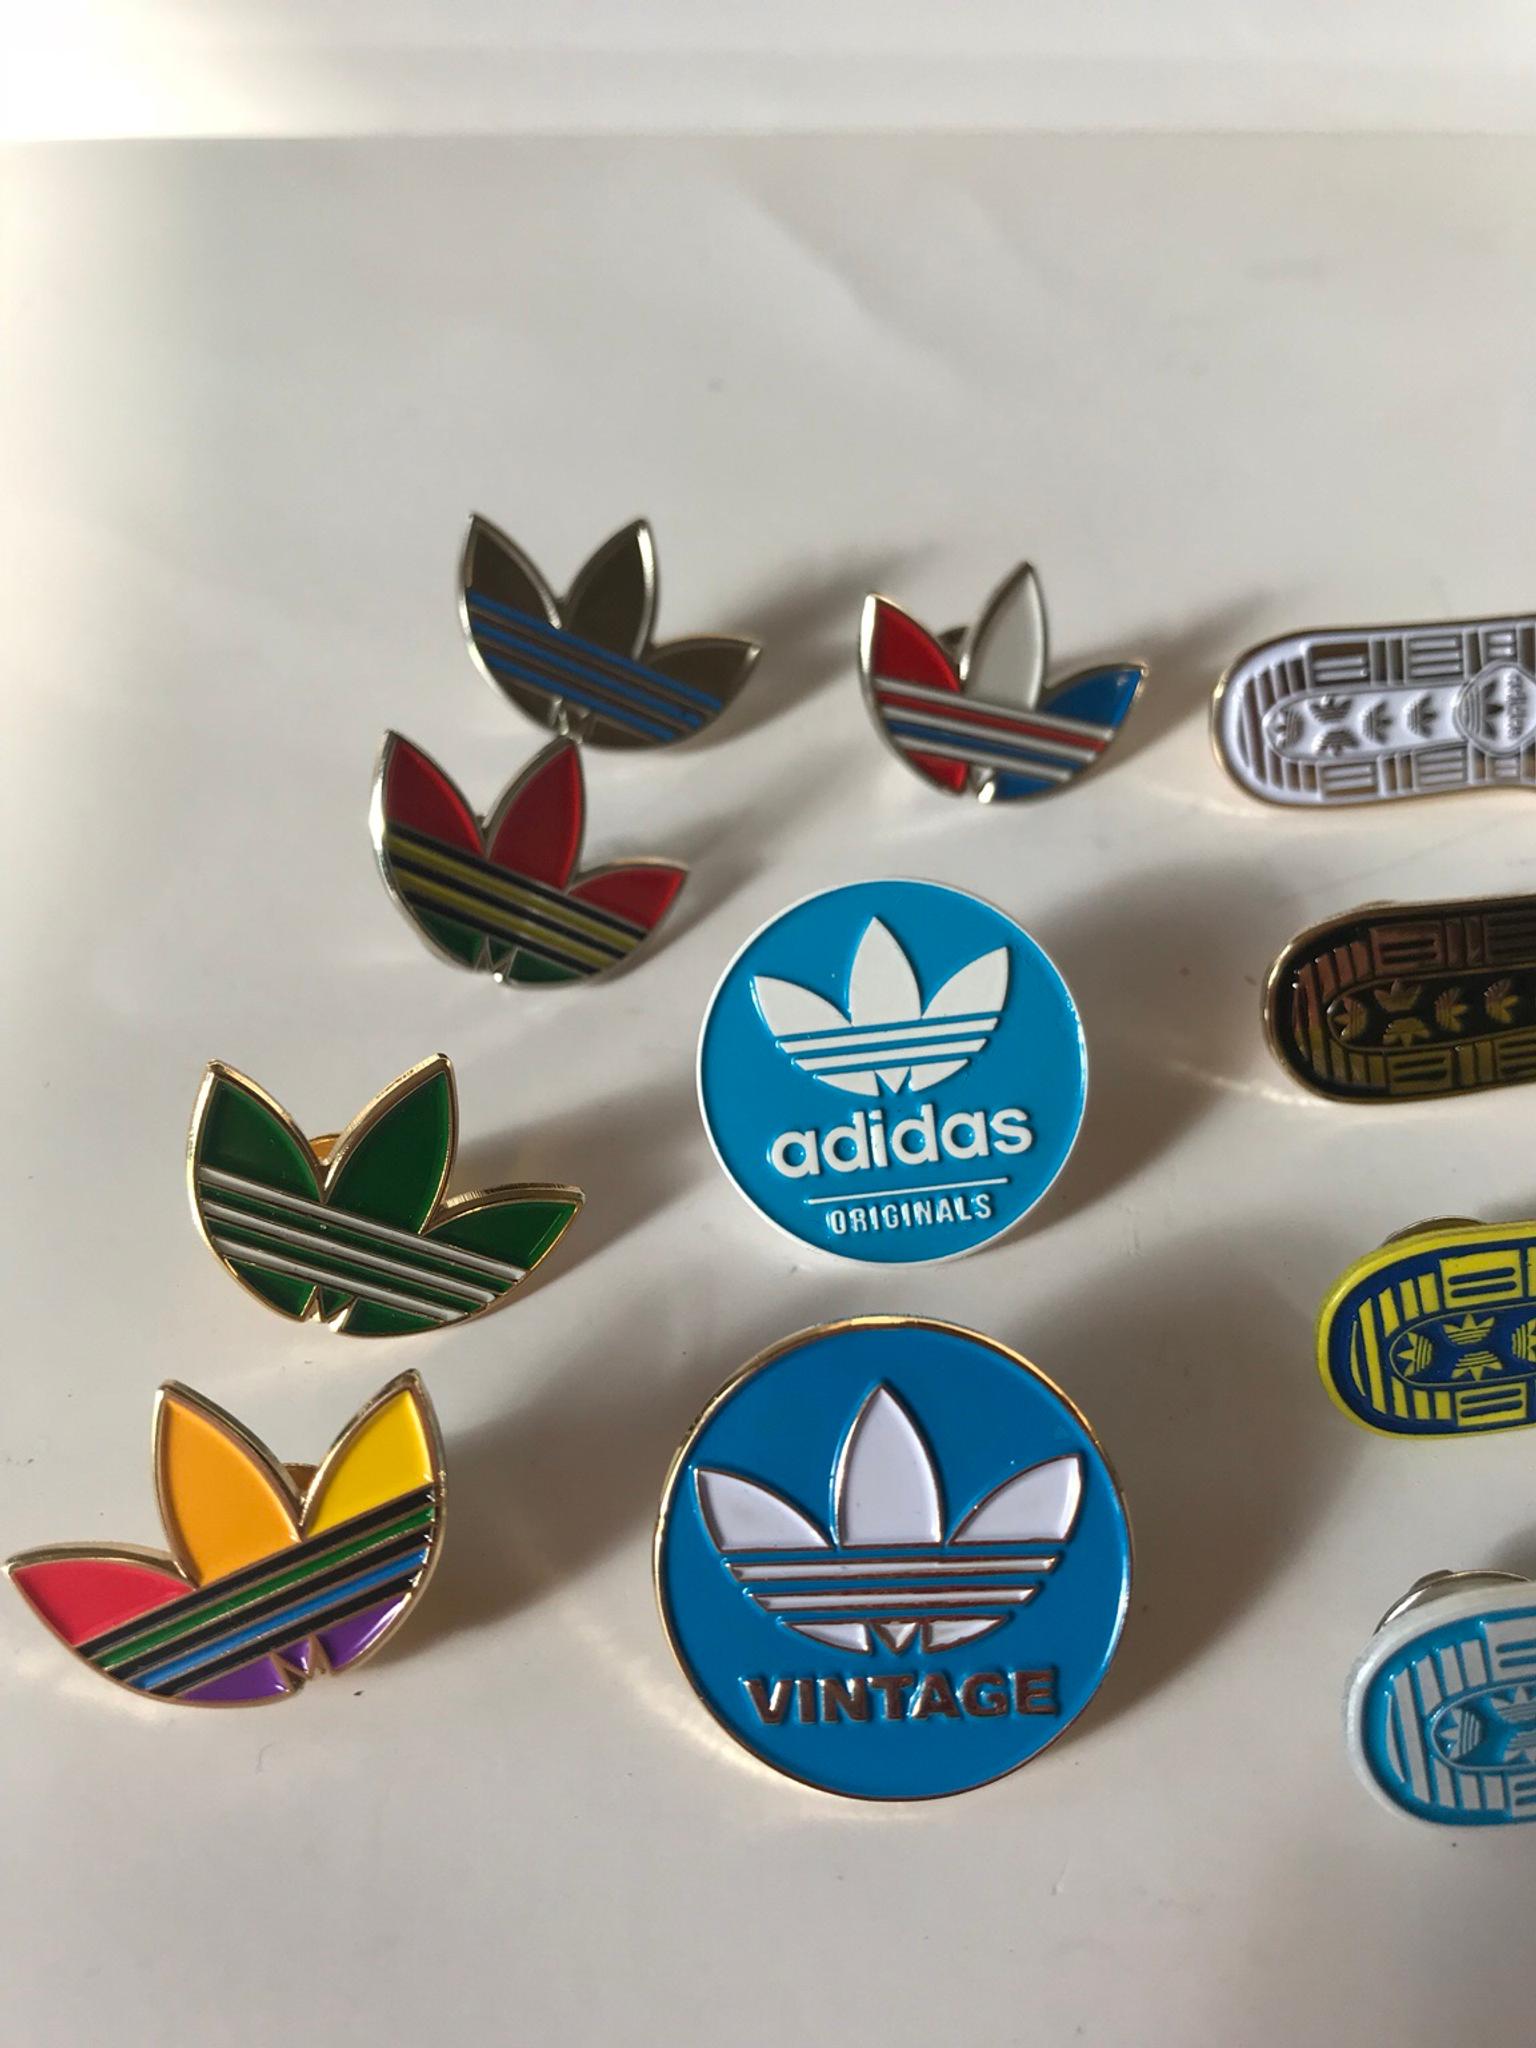 15 stone island & Adidas Originals pin badges in LS2 Leeds for £29.99 ...